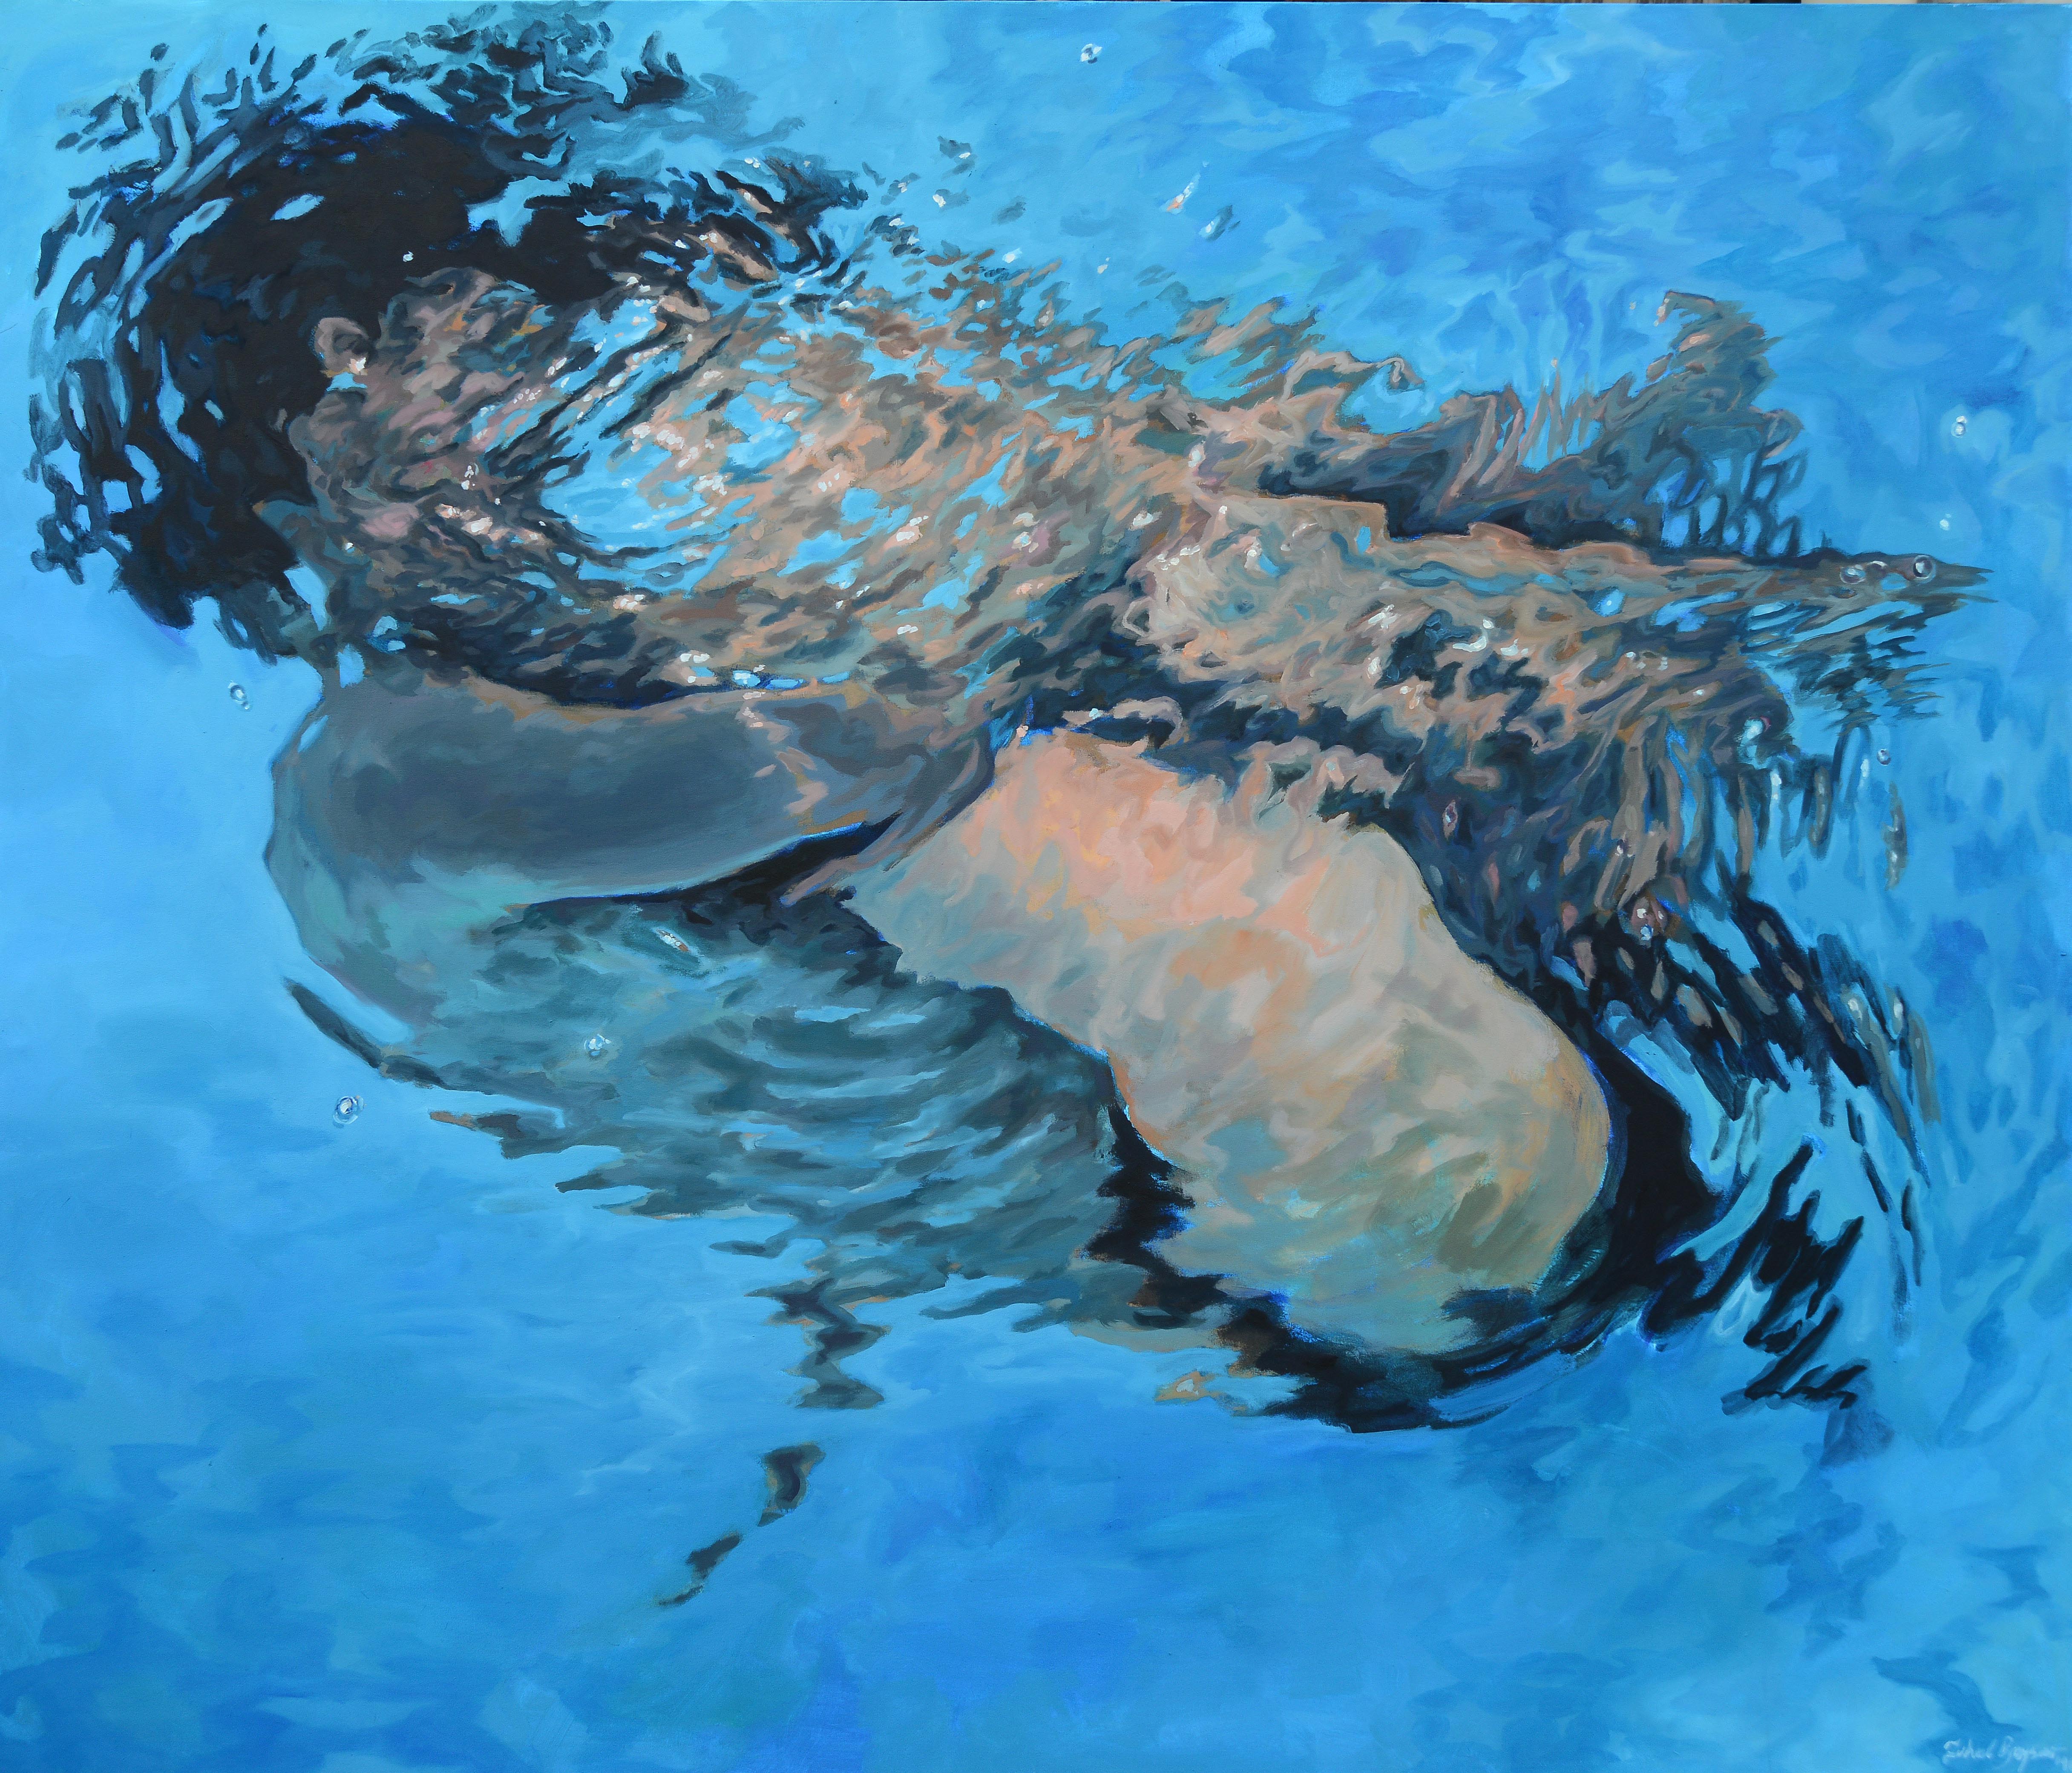 İsimsiz- Untitled, 2010, Tuval üzerine yağlıboya- Oil on canvas, 160x190 cm